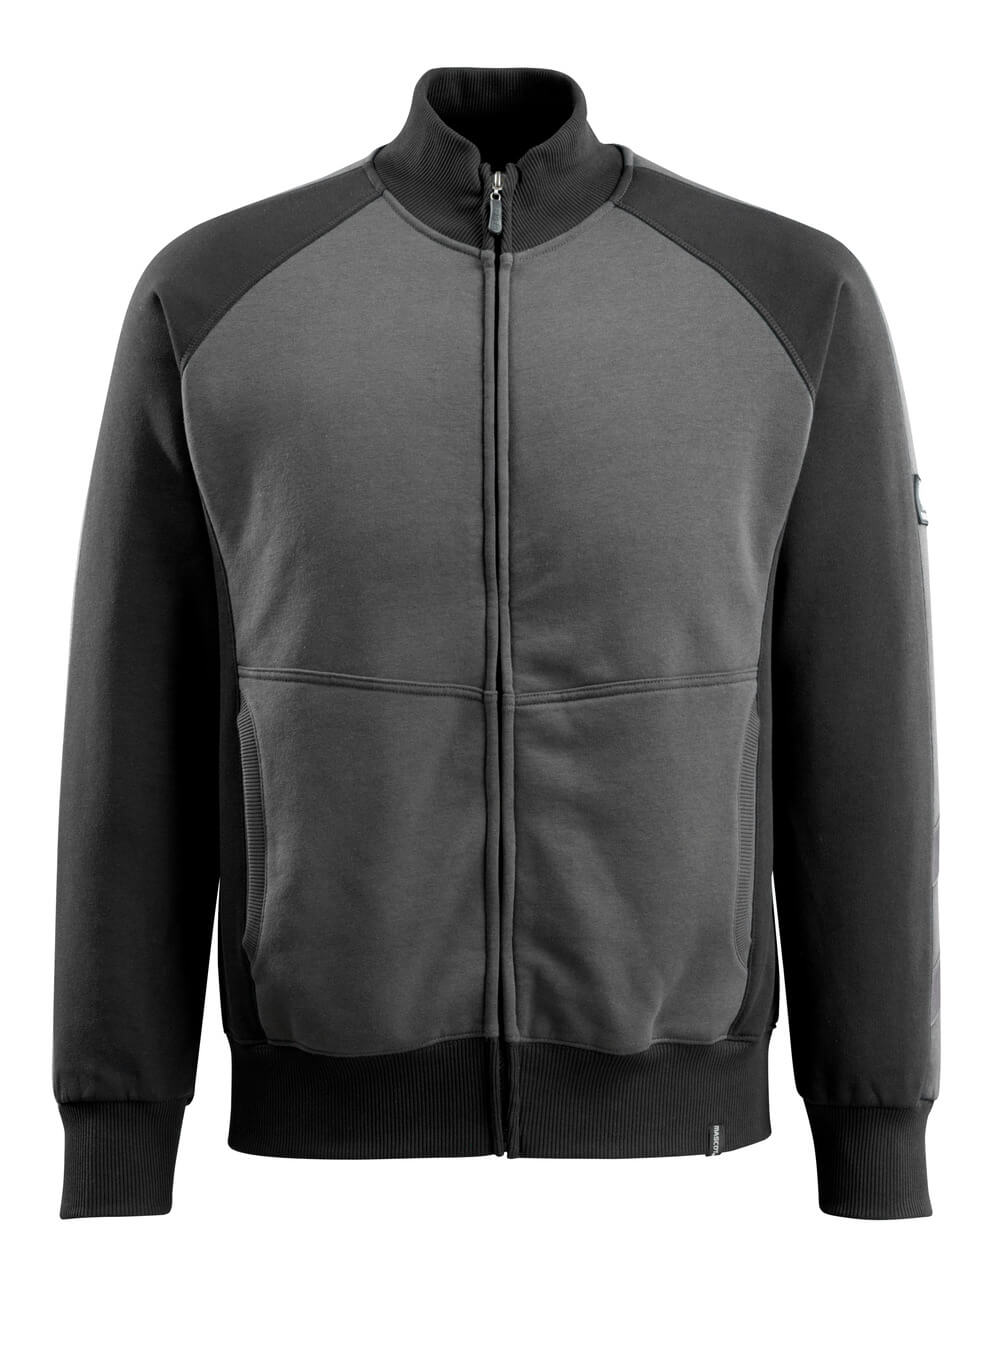 Mascot UNIQUE  Amberg Sweatshirt with zipper 50565 dark anthracite/black